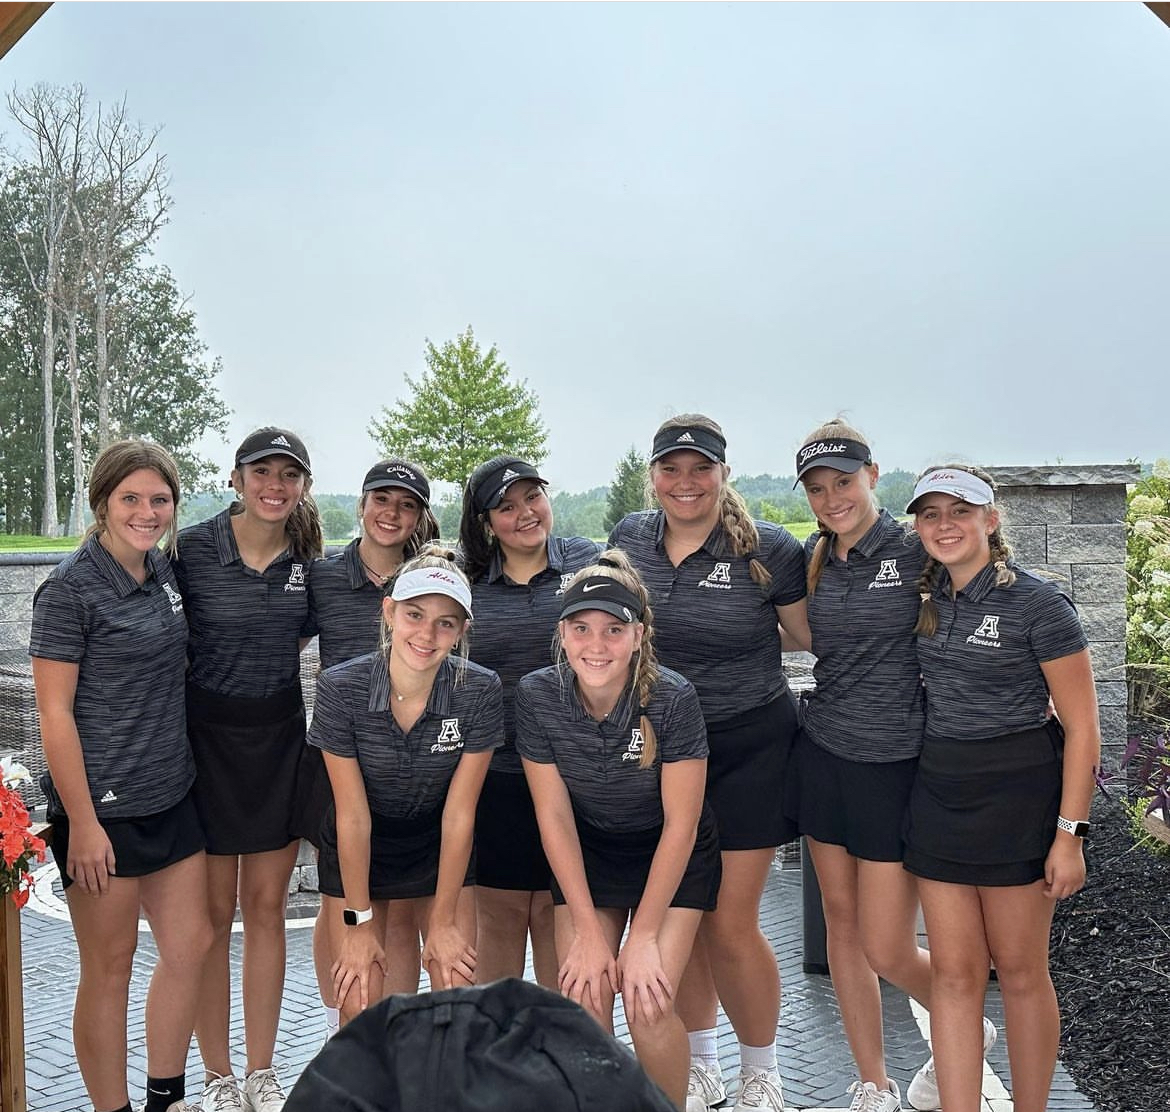 JAHS girls golf team pose at their regular season match.